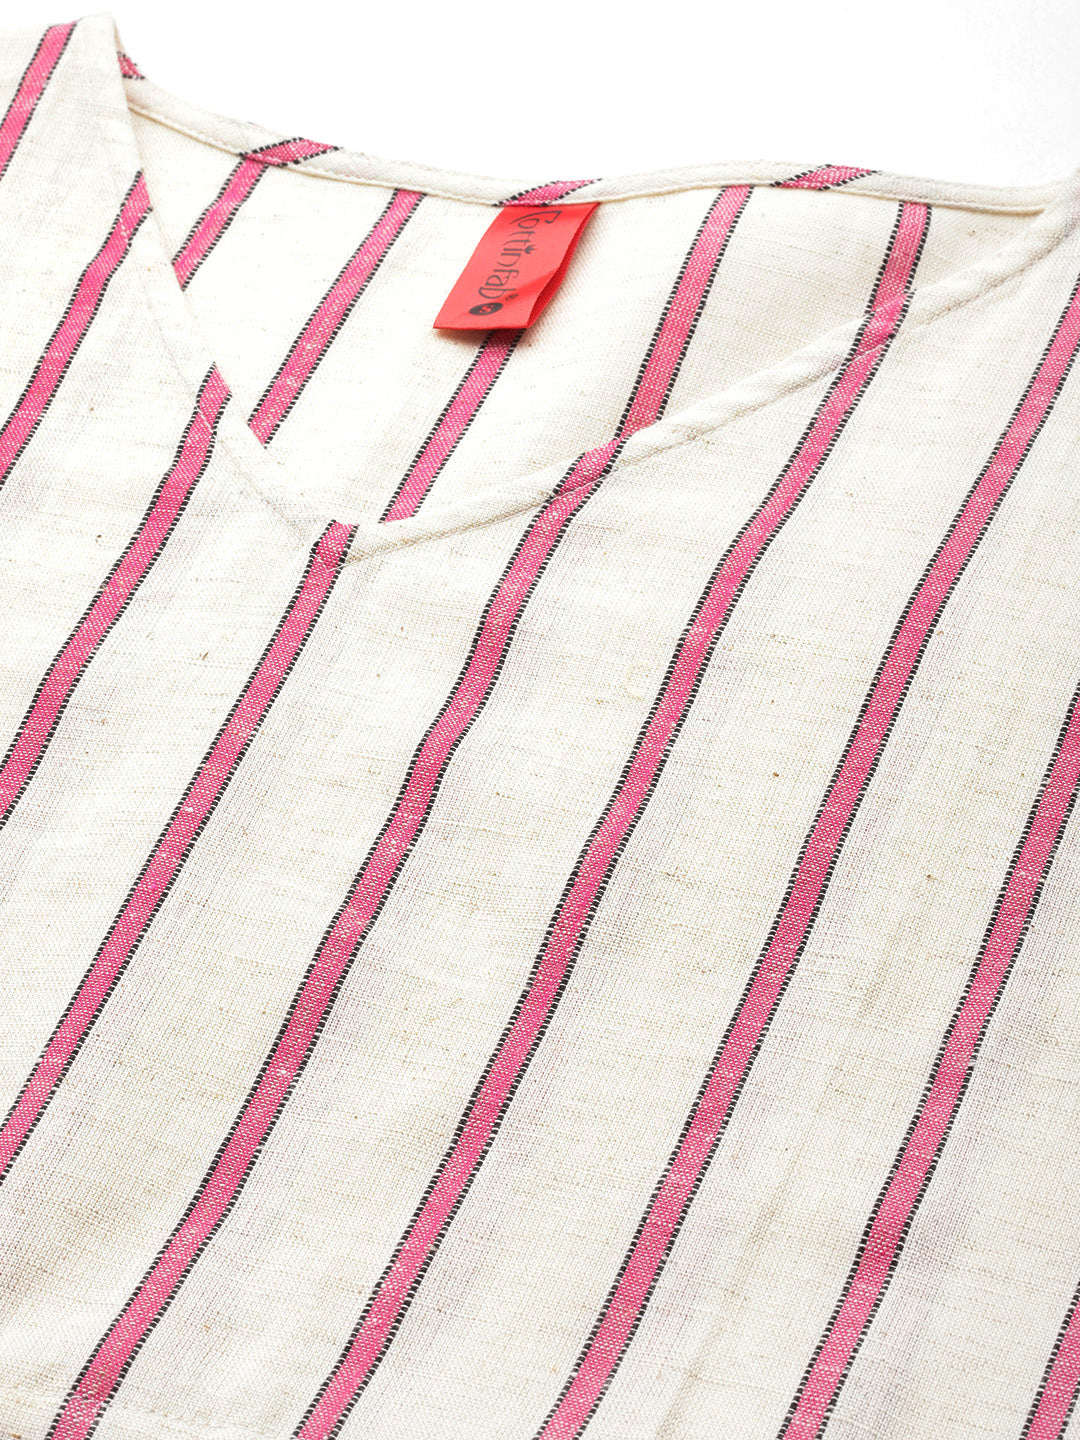 Cottinfab Women Striped Kimono Sleeve Kaftan Dress